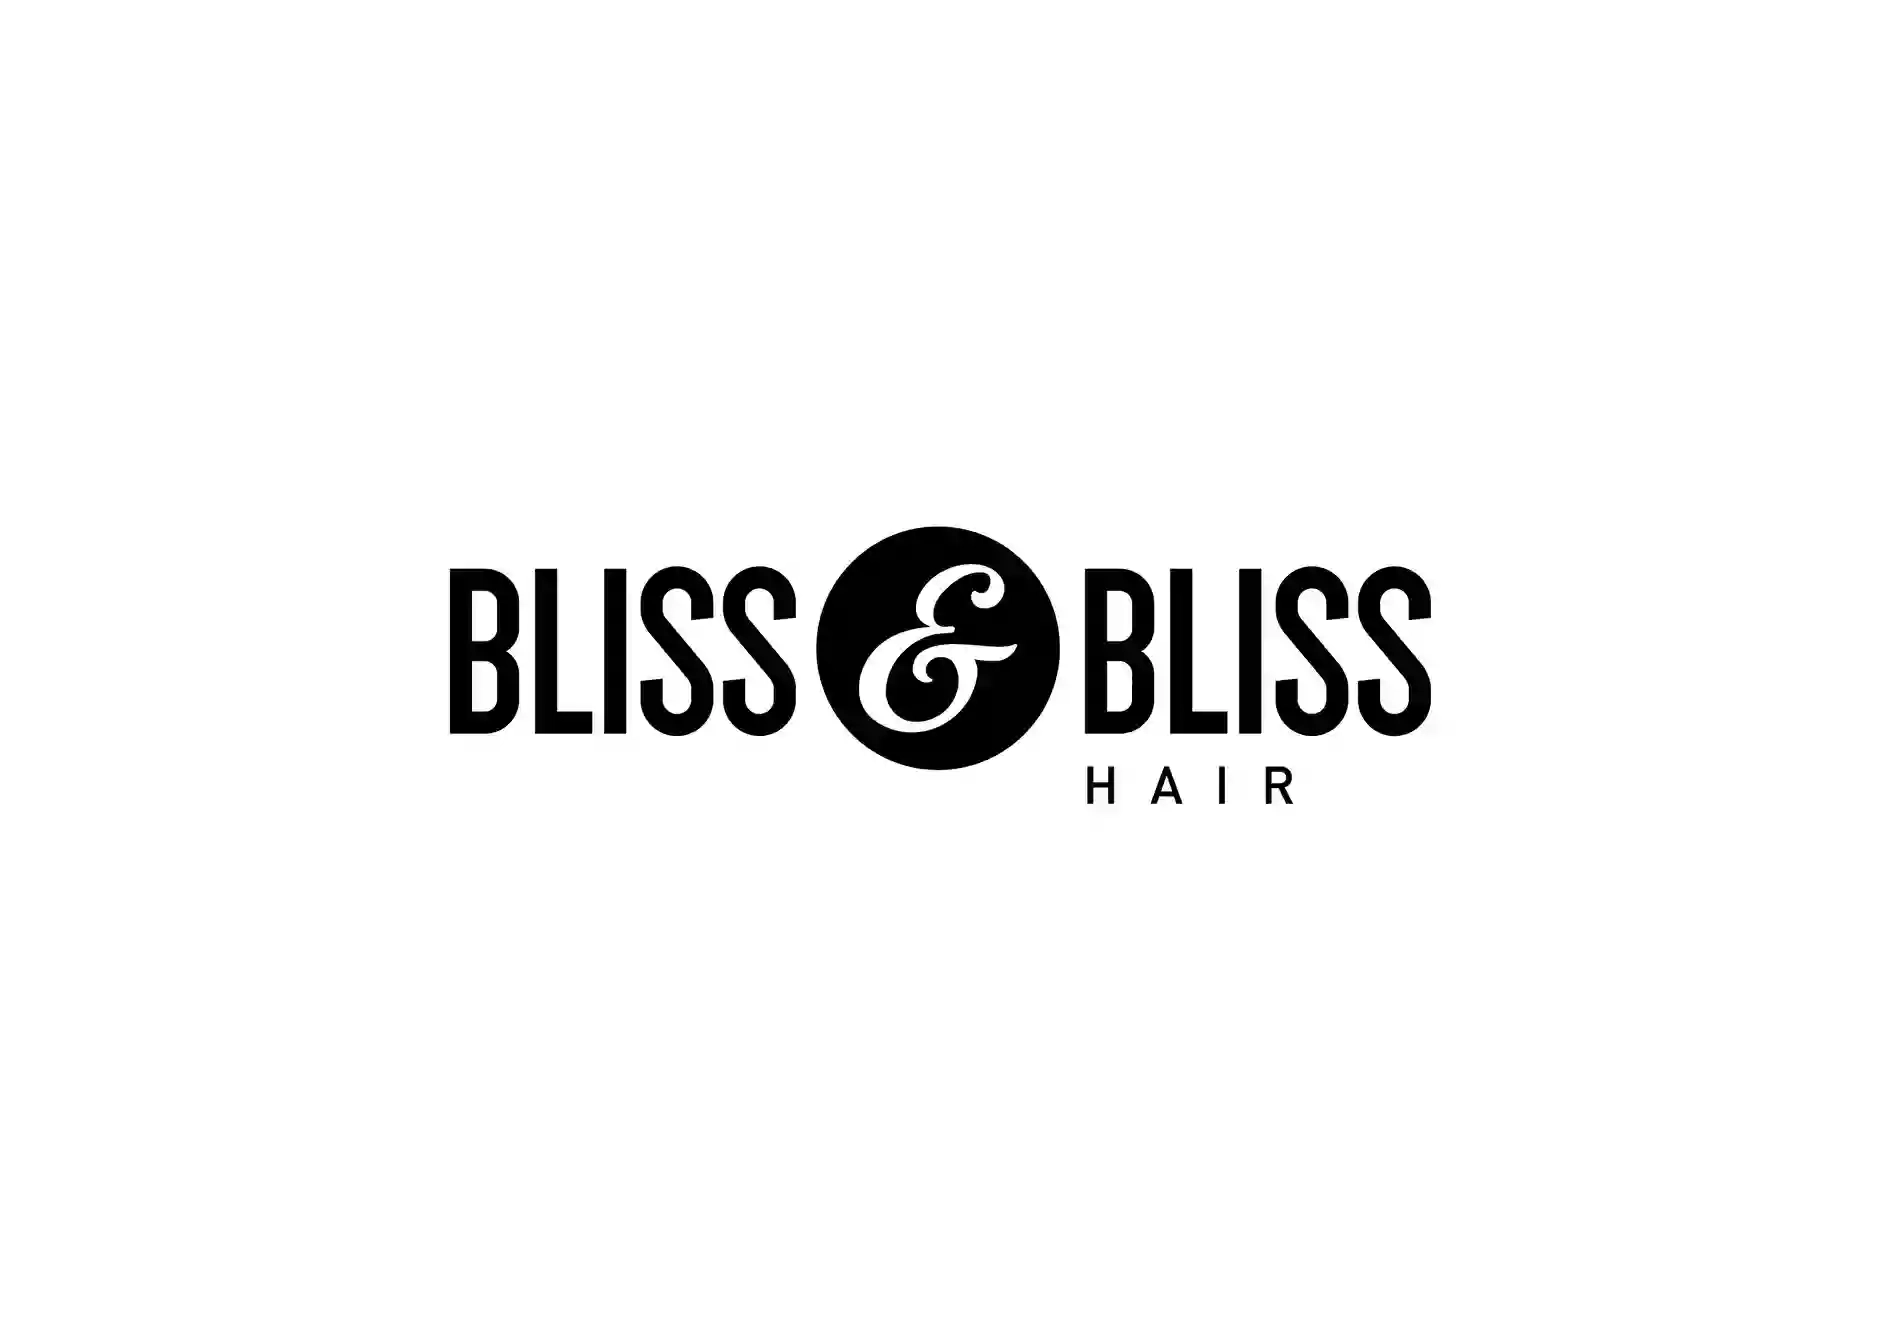 BLISS & BLISS HAIR